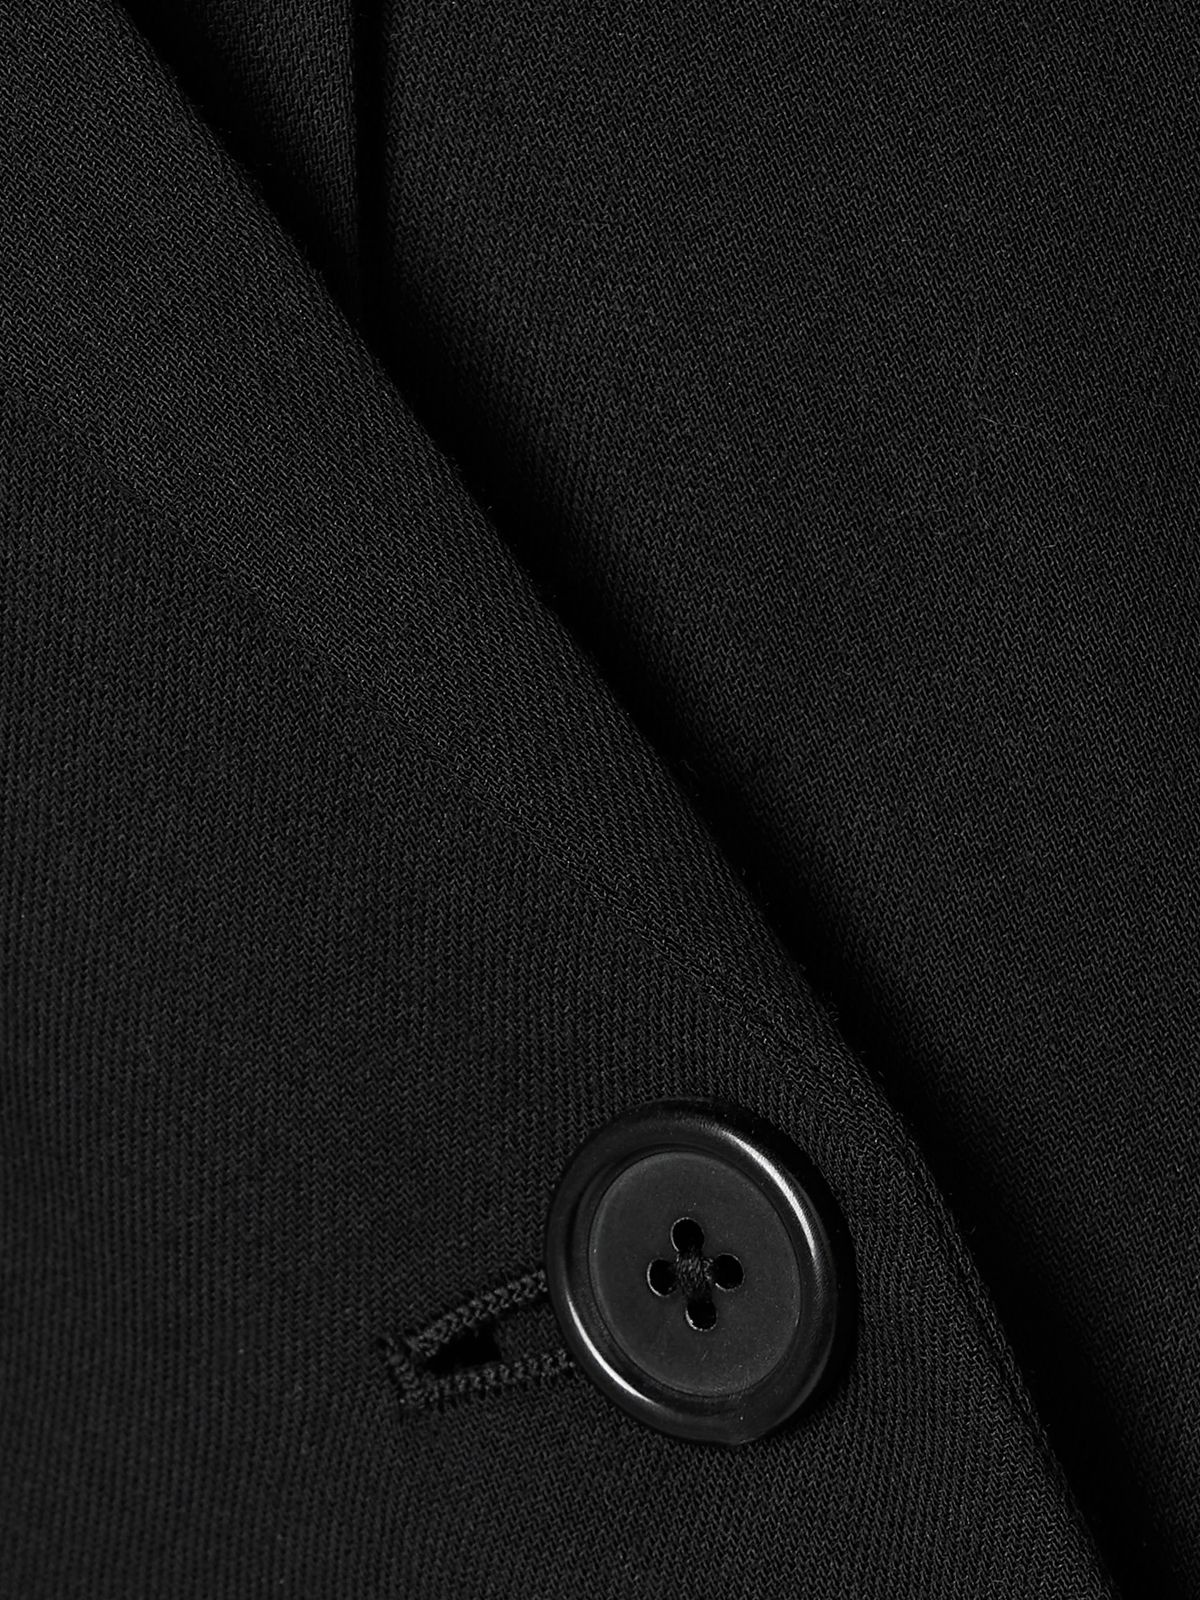 Palomar Ann Demeulemeester Man`s black cotton jacket - 5